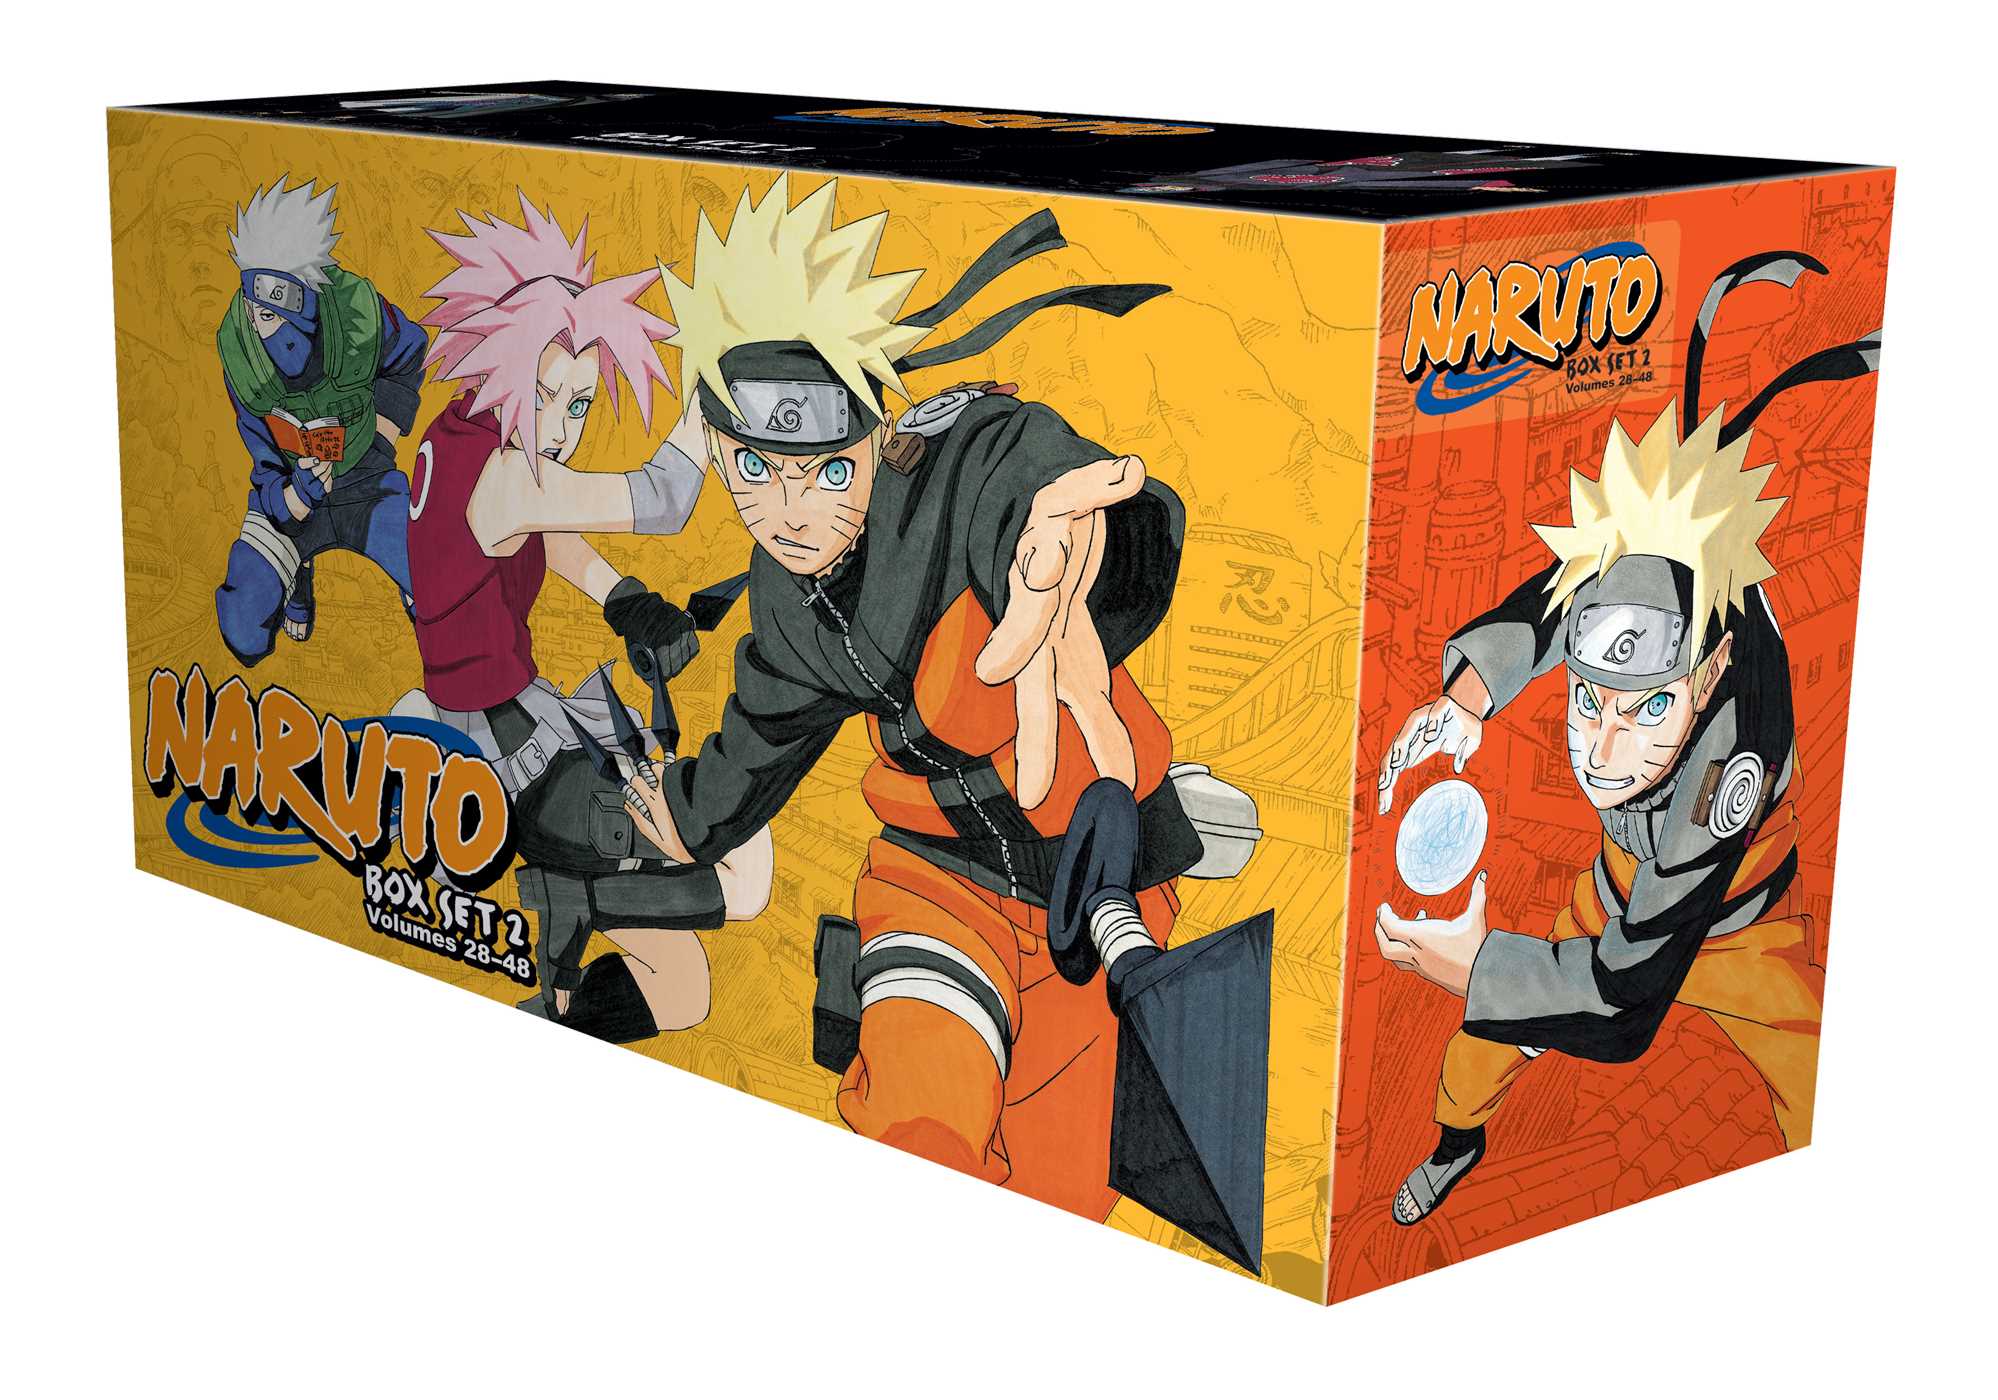 Naruto Box Set 2 Volumes 28-48 with Premium By Masashi Kishimoto - LV'S Global Media